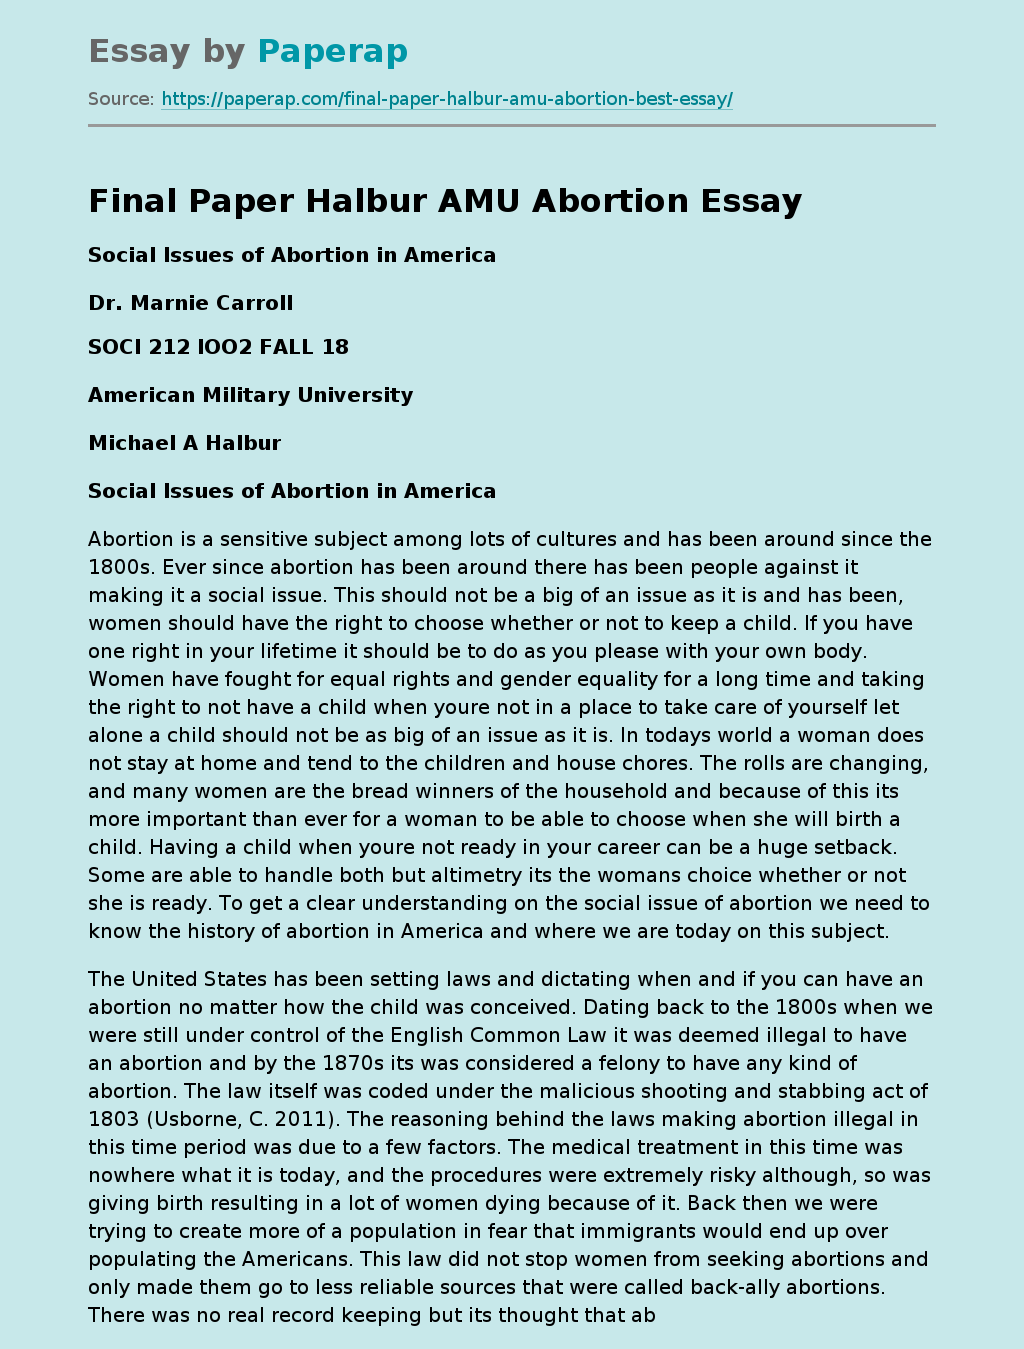 Final Paper Halbur AMU Abortion